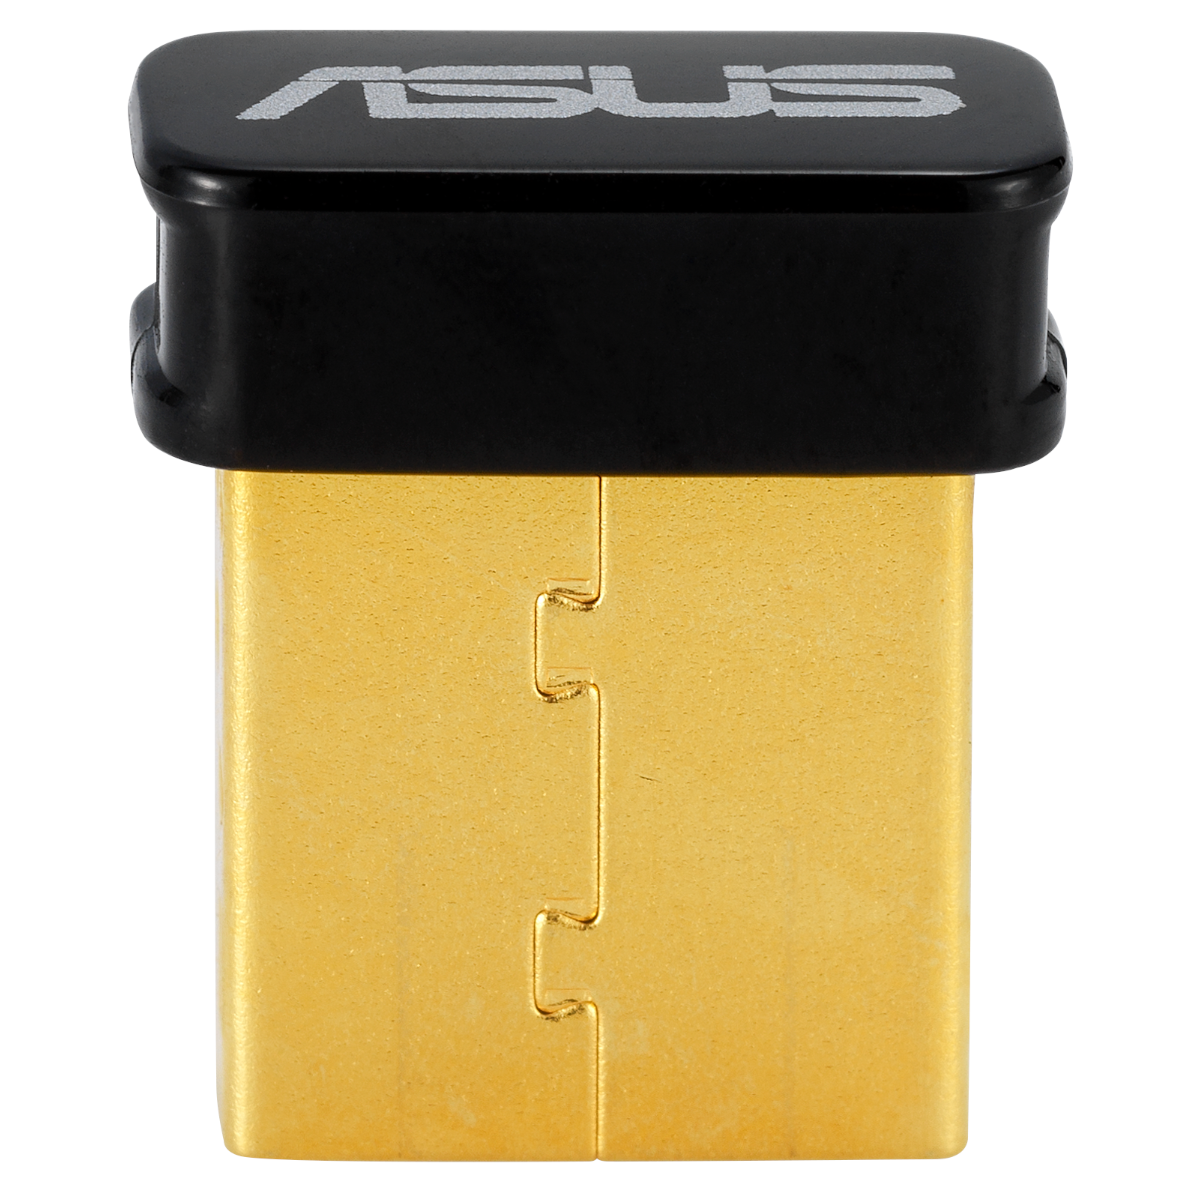 Asus - ASUS USB-BT500 Bluetooth 5.0 USB Adapter